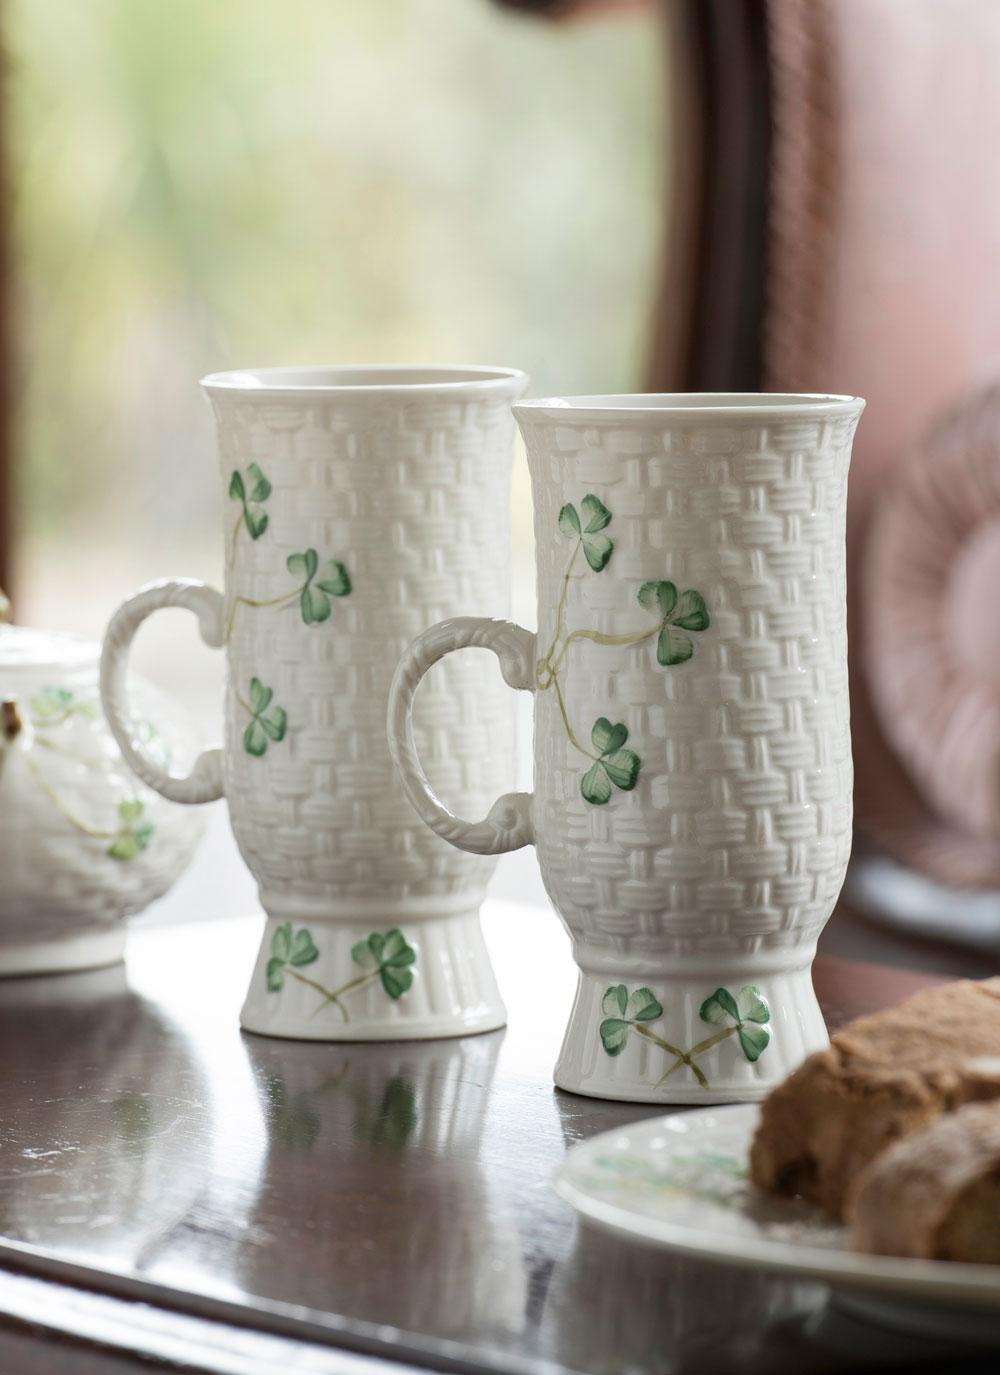 Coffee cups by Belleek made in Ireland